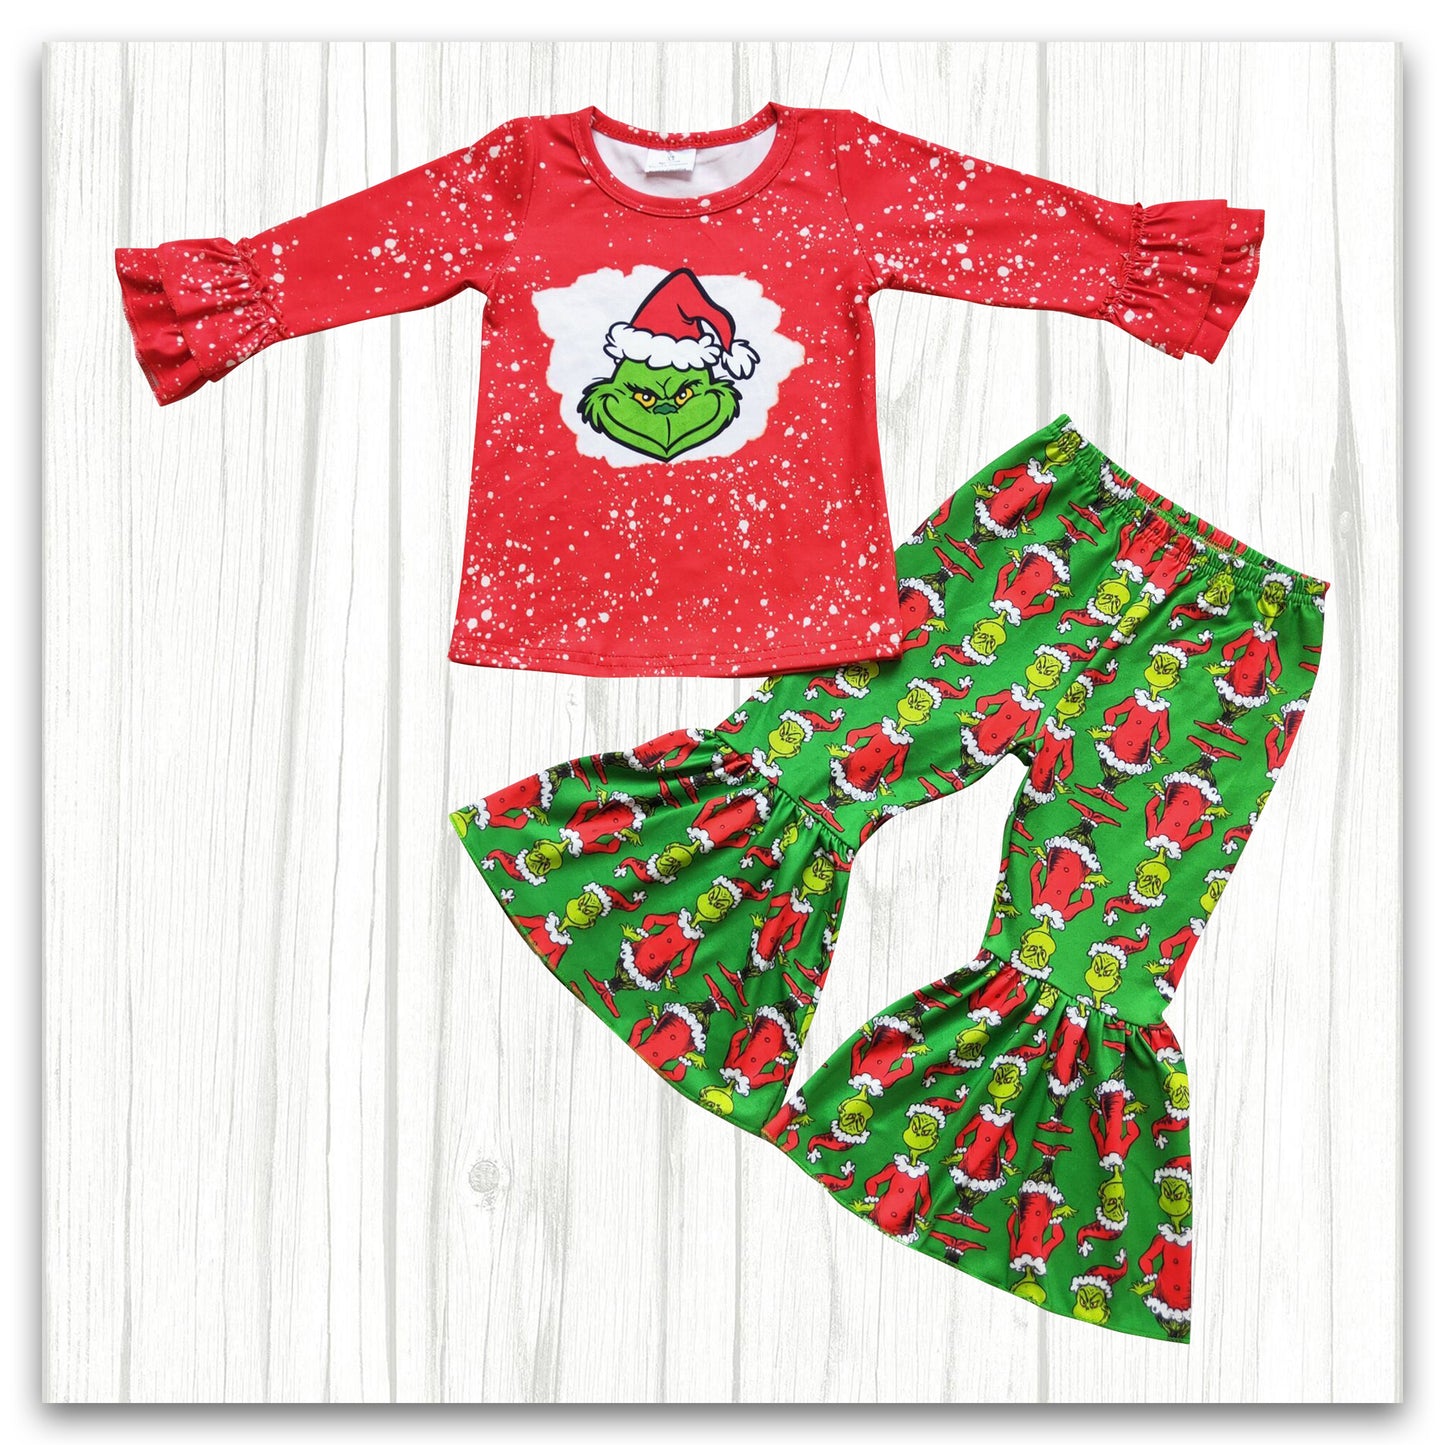 Kids christmas clothing for baby girl